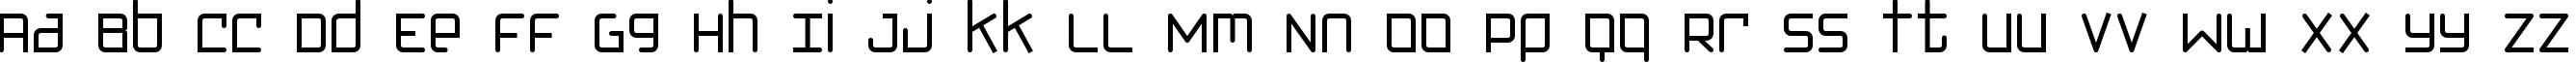 Пример написания английского алфавита шрифтом Klondike